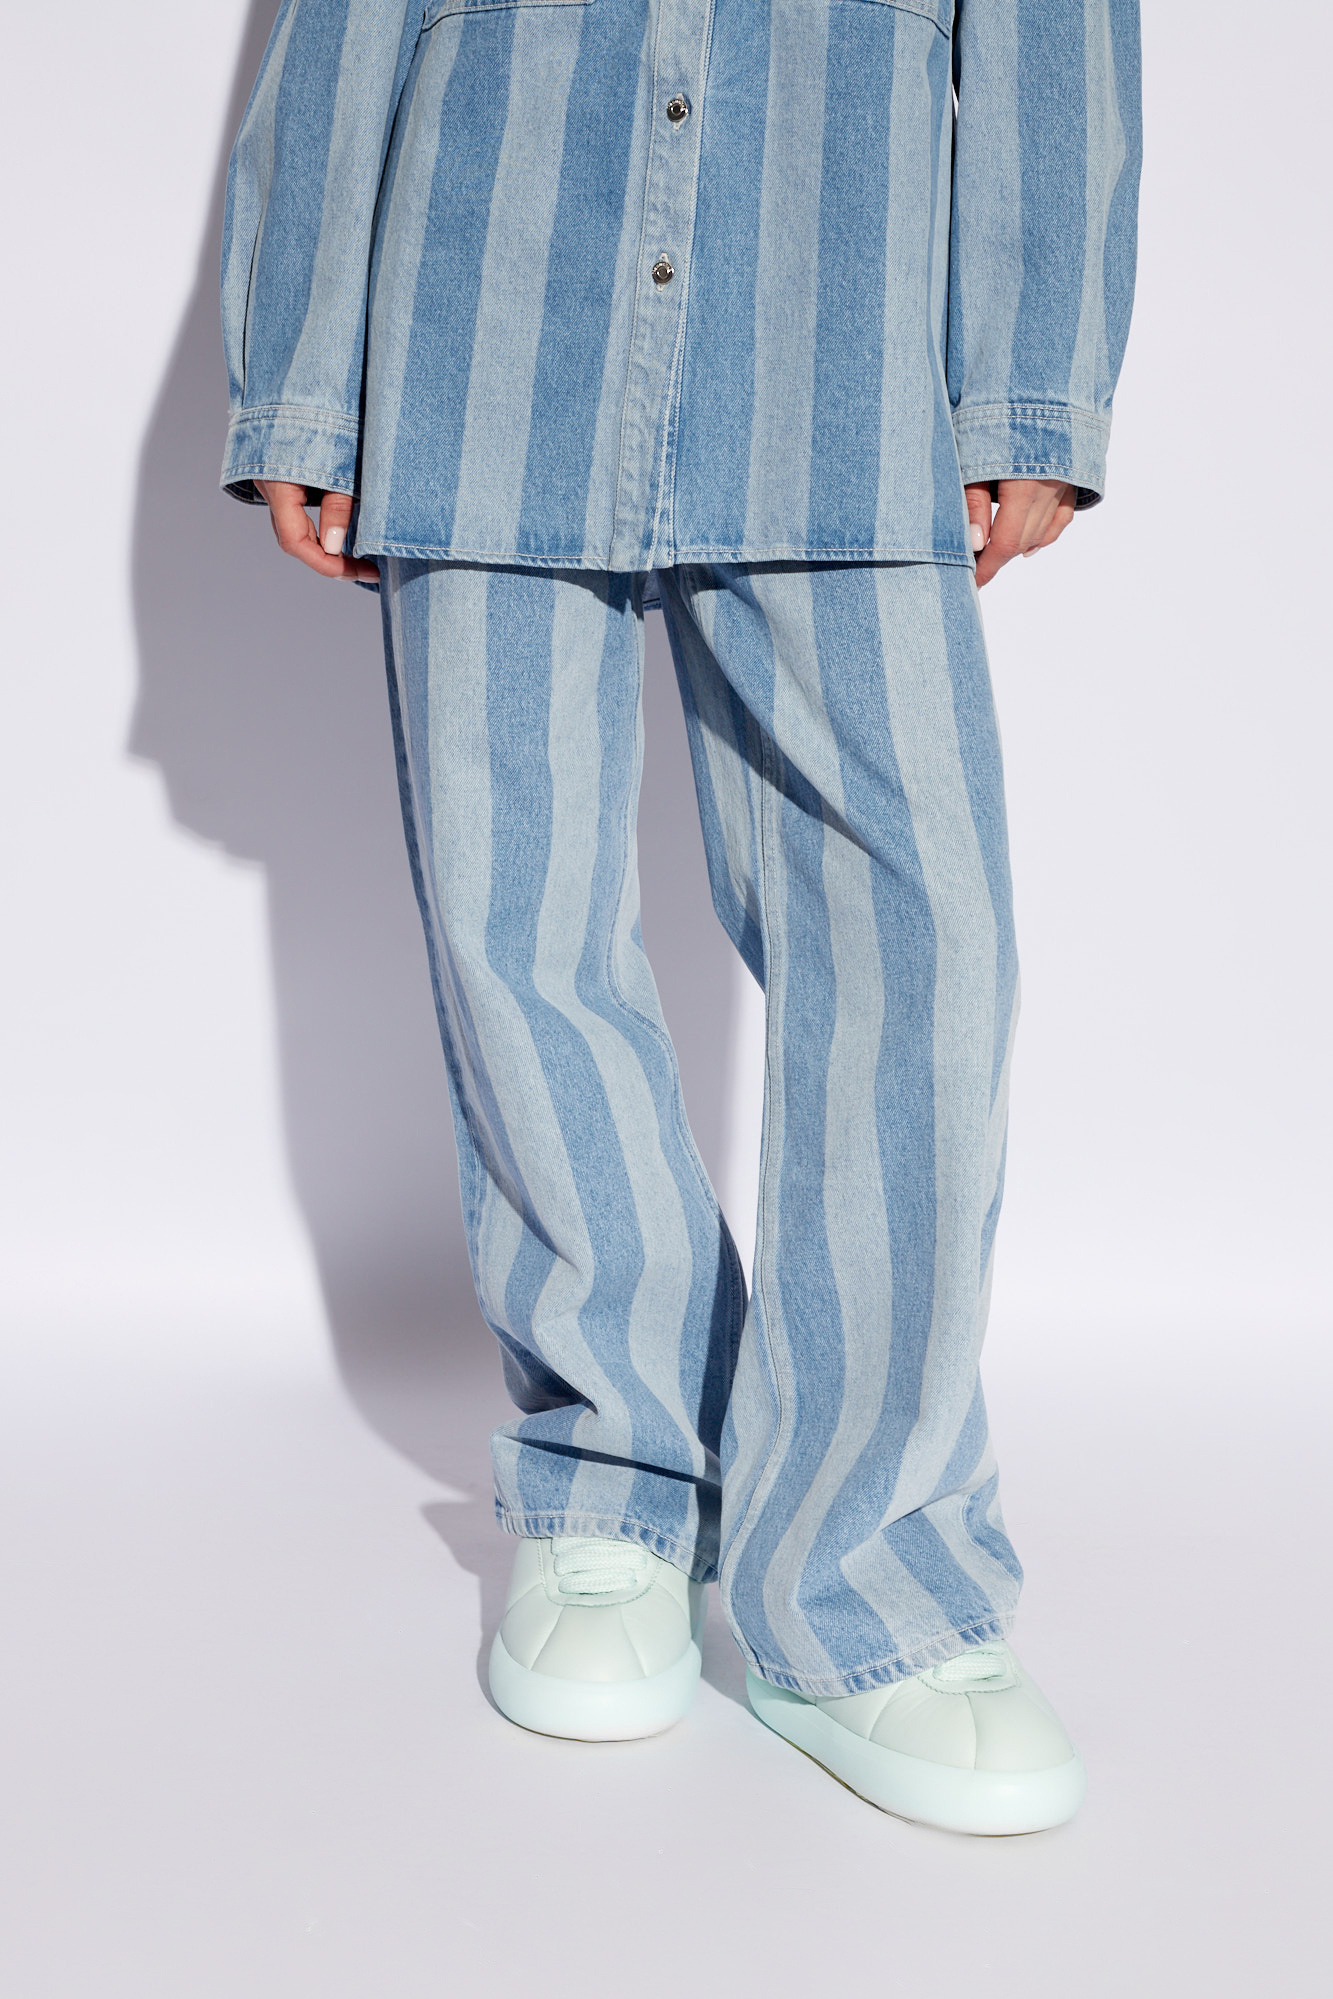 Micro Fleece Leggings for €7 - Pajama Pants - Hunkemöller